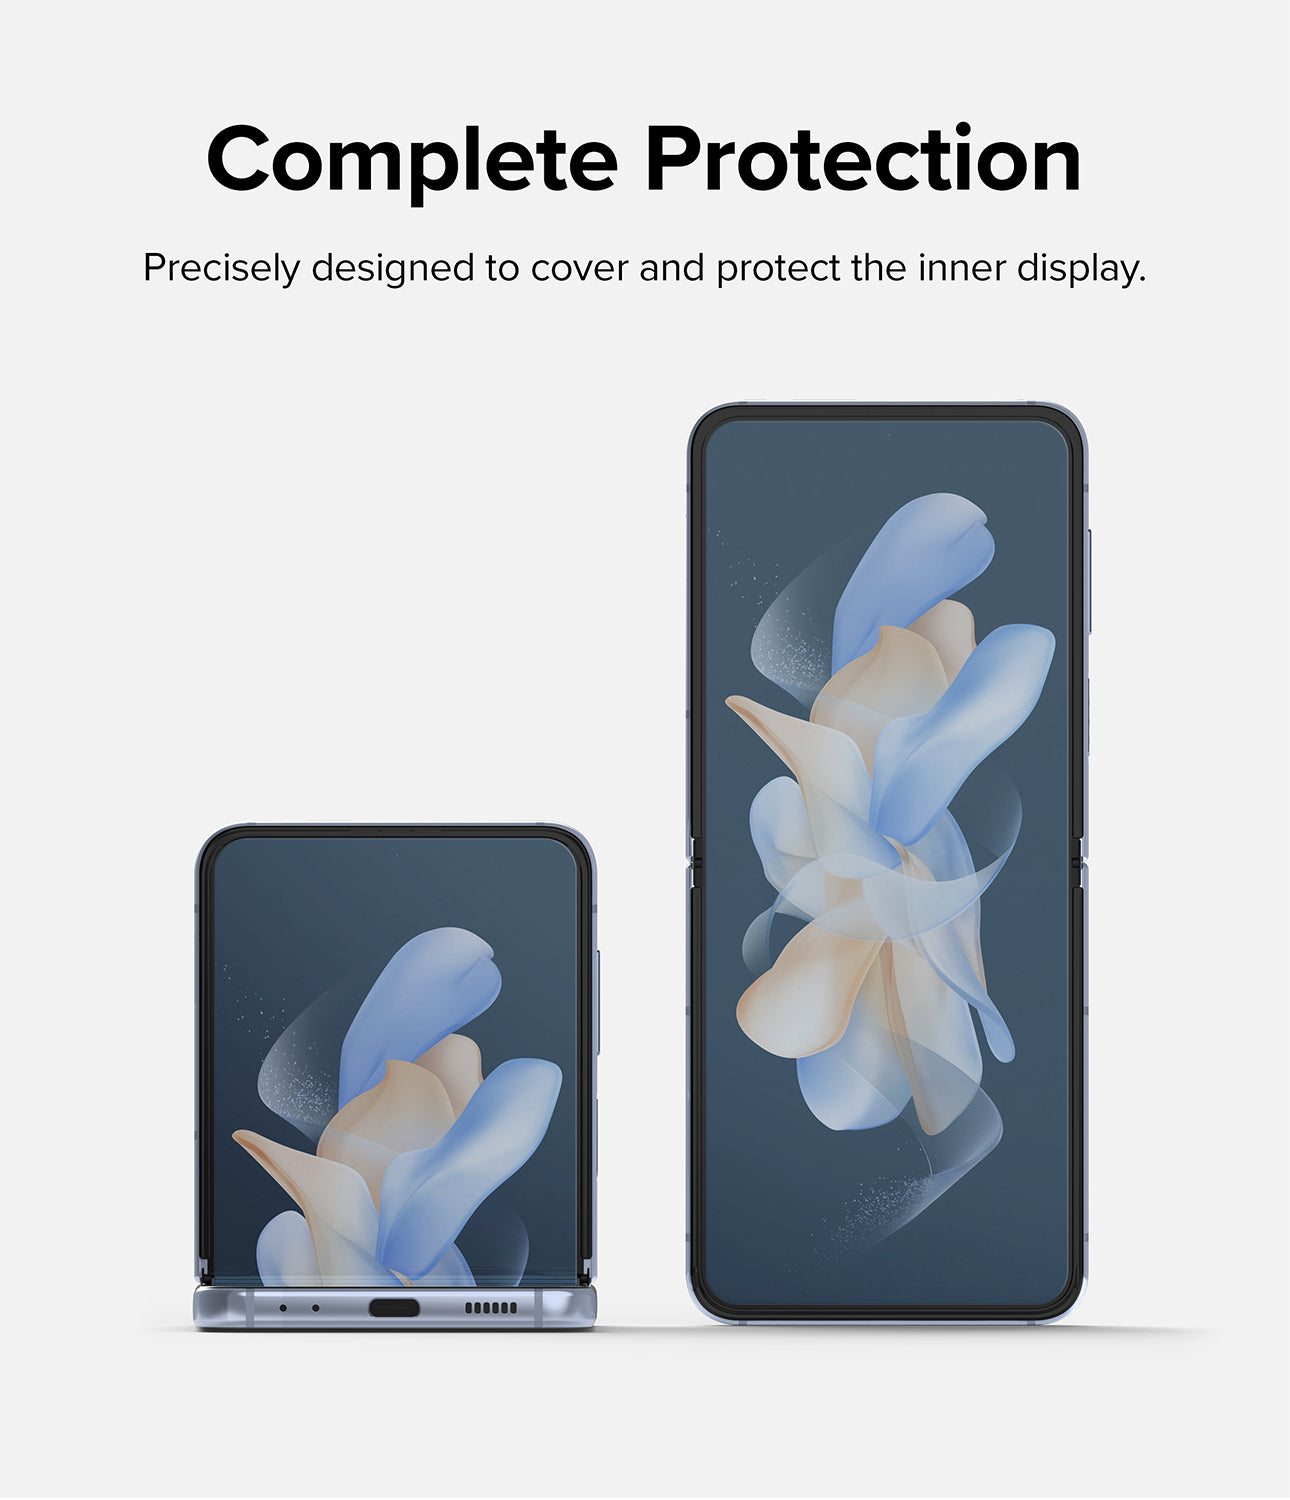 Galaxy Z Flip 4 Screen Protector | Dual Easy Film